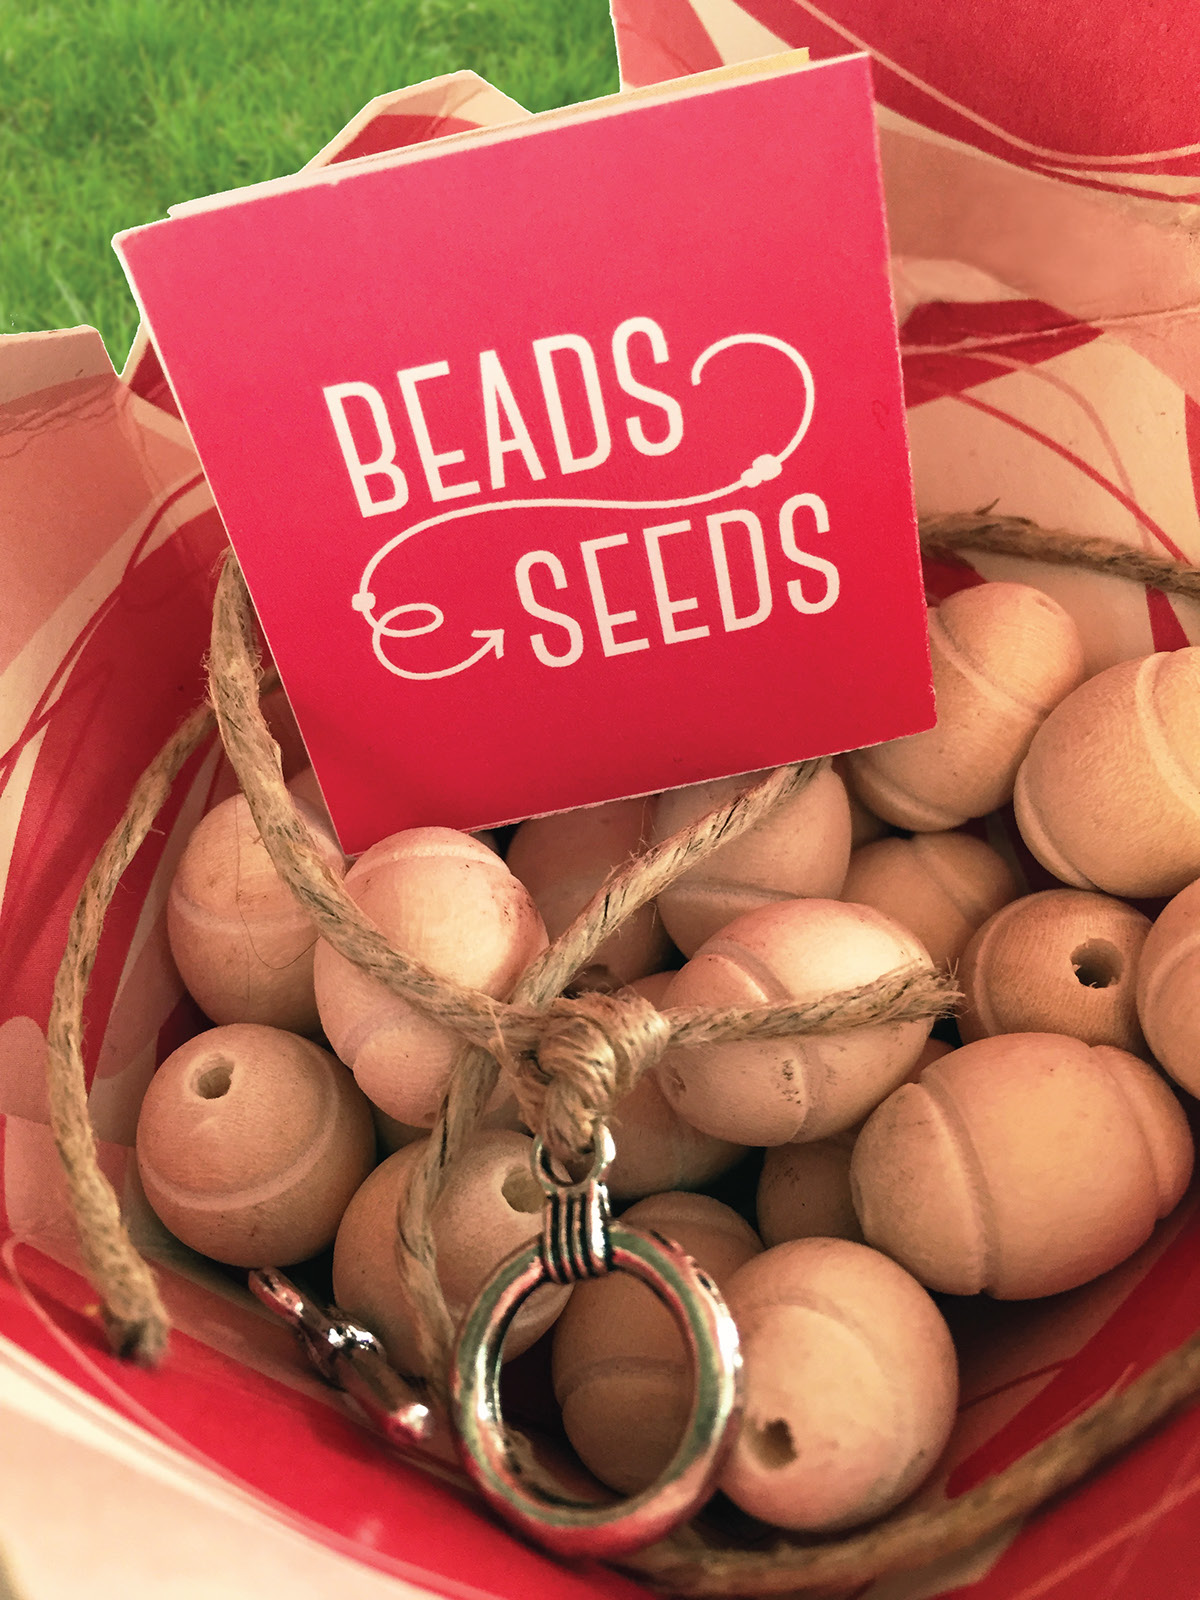 umsl amyjanedesigns Logo Design beads to seeds